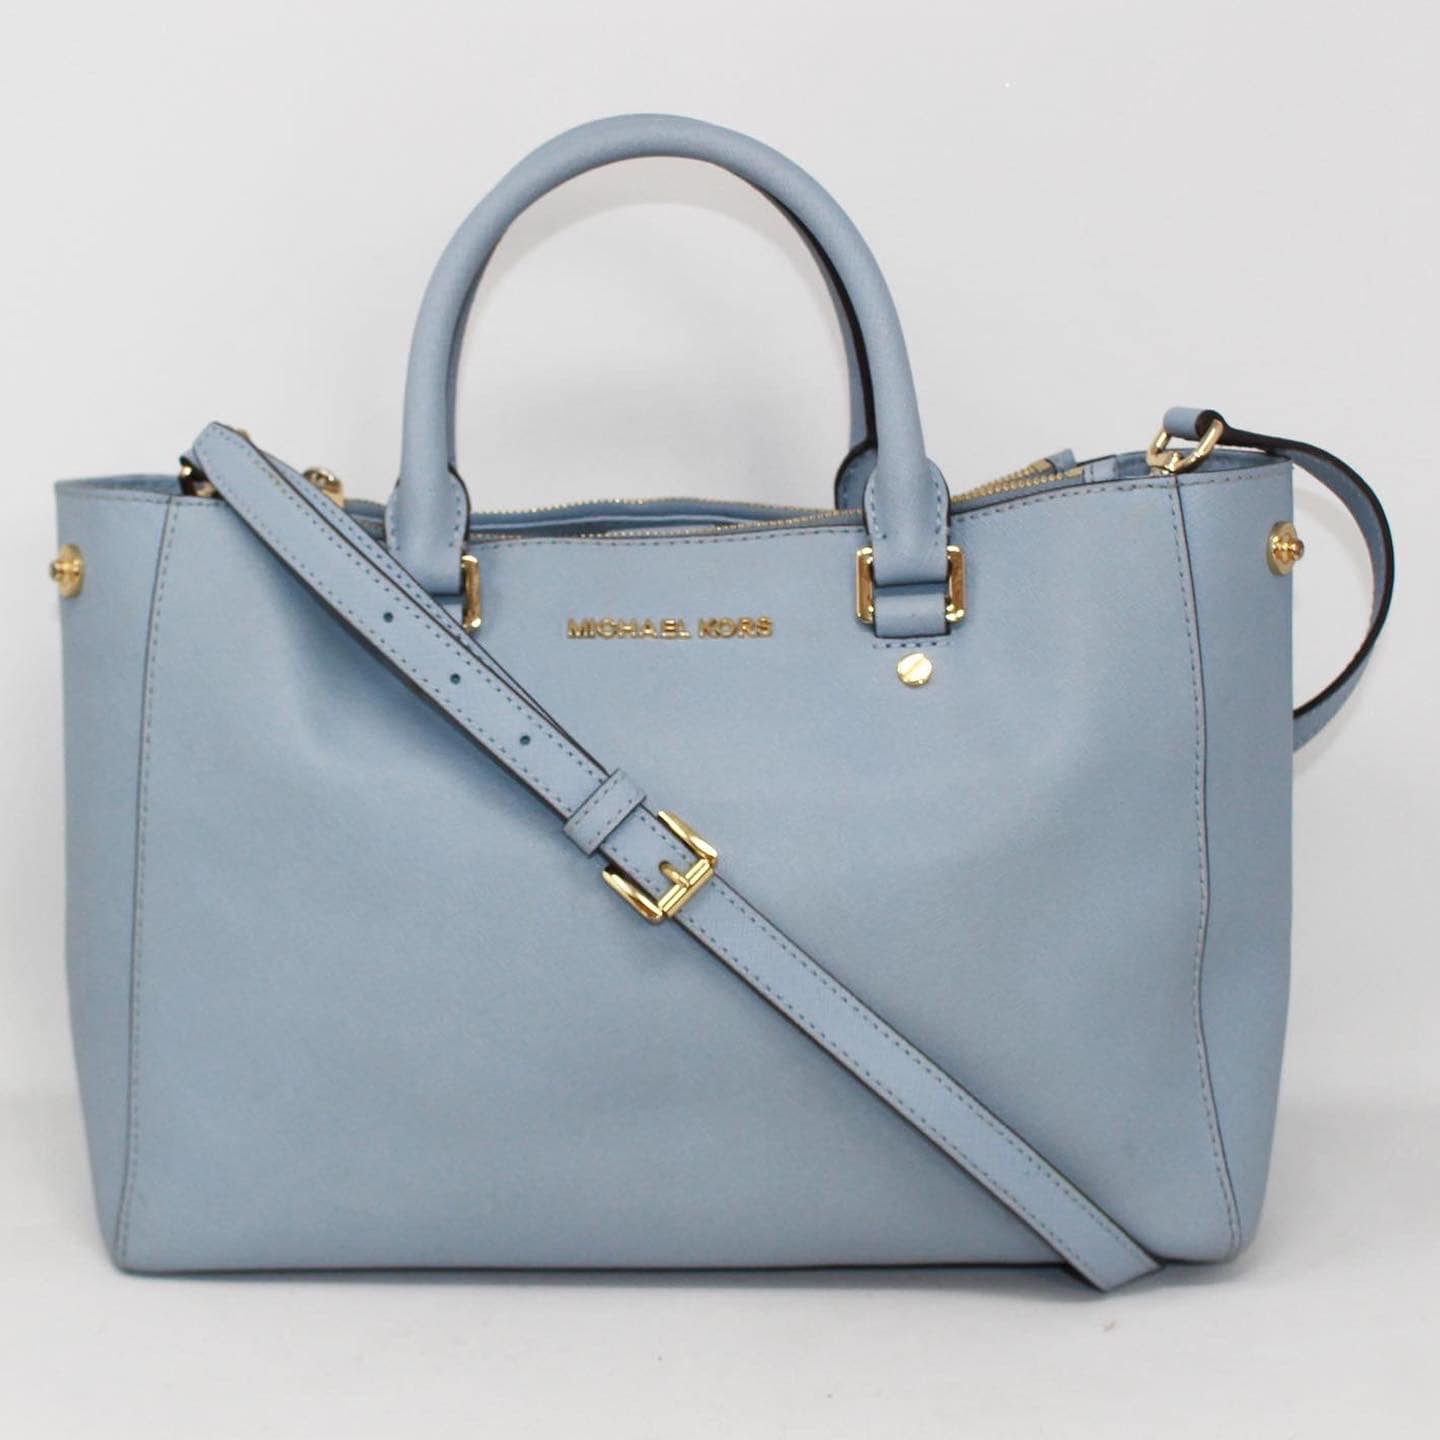 MICHAEL KORS 39965 Sky Blue Color Leather Crossbody Bag a